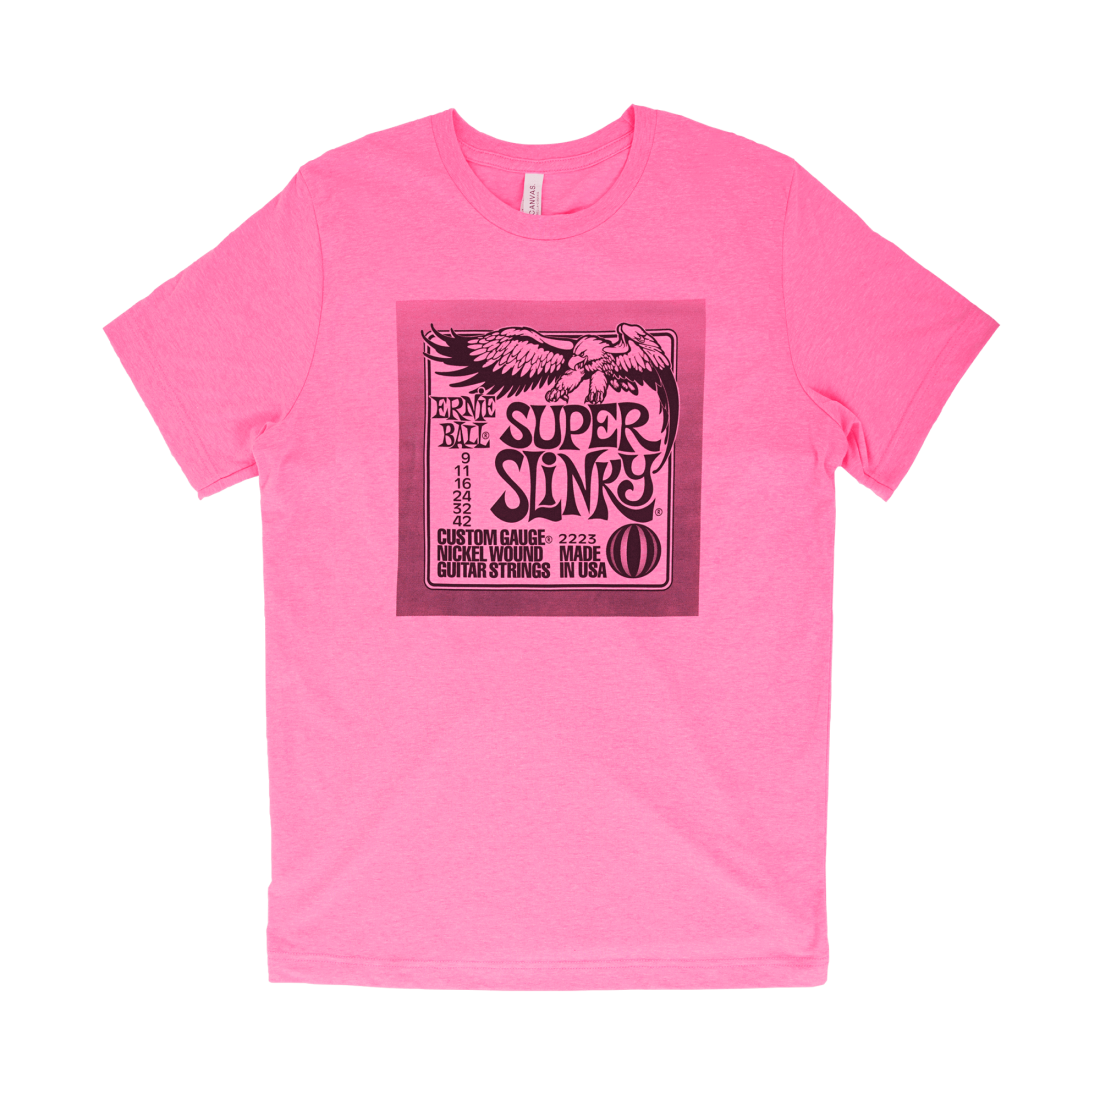 Super Slinky T-Shirt - Pink - XXL